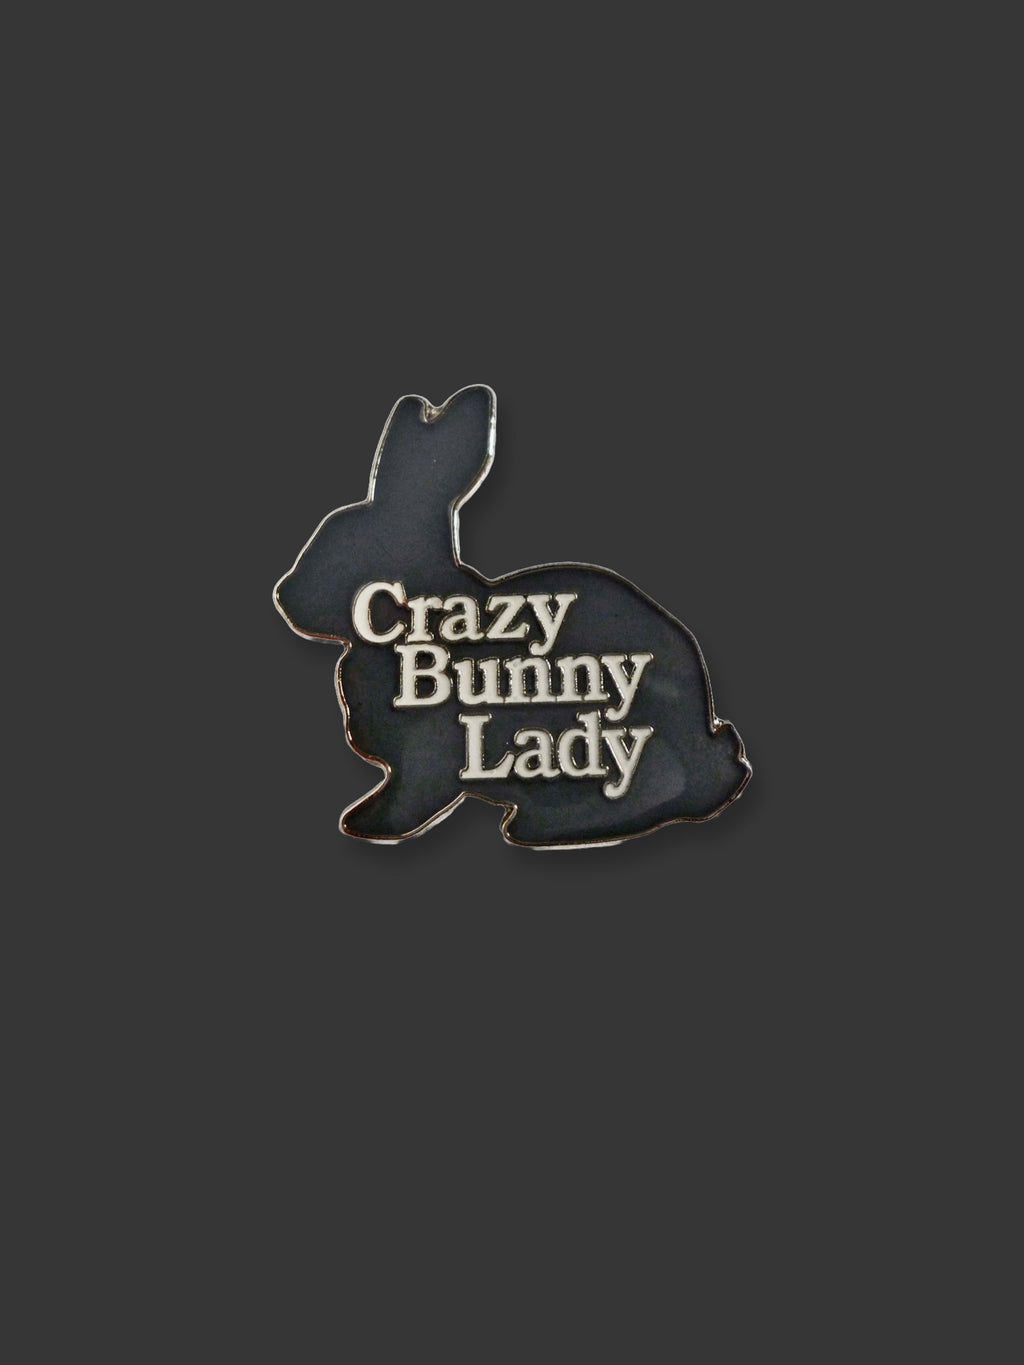 Crazy Bunny Lady Metal Pin Badge